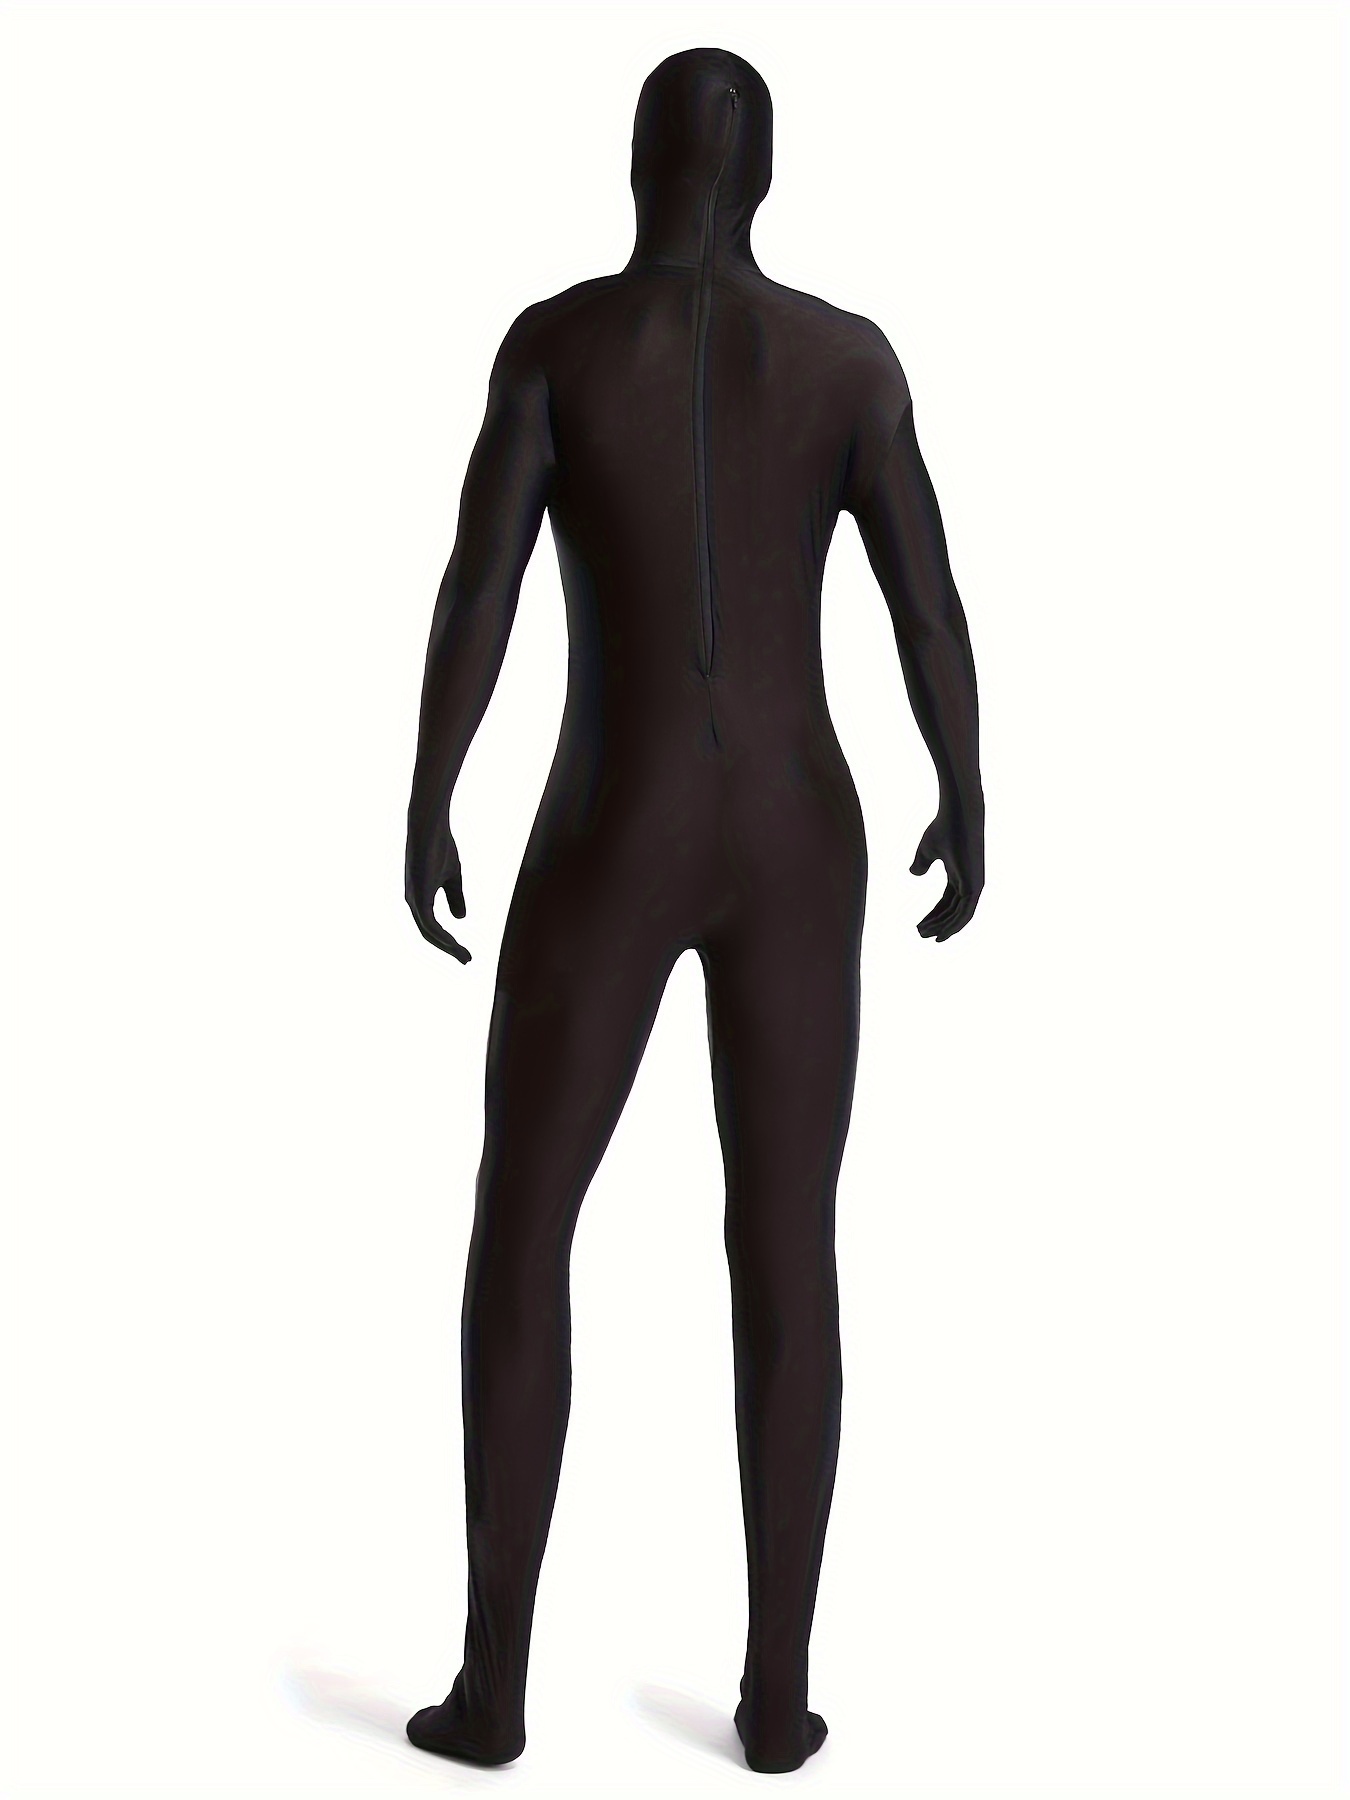 Bodysuit Zentai Lycra Spandex Suit for men in Liquid Gold http